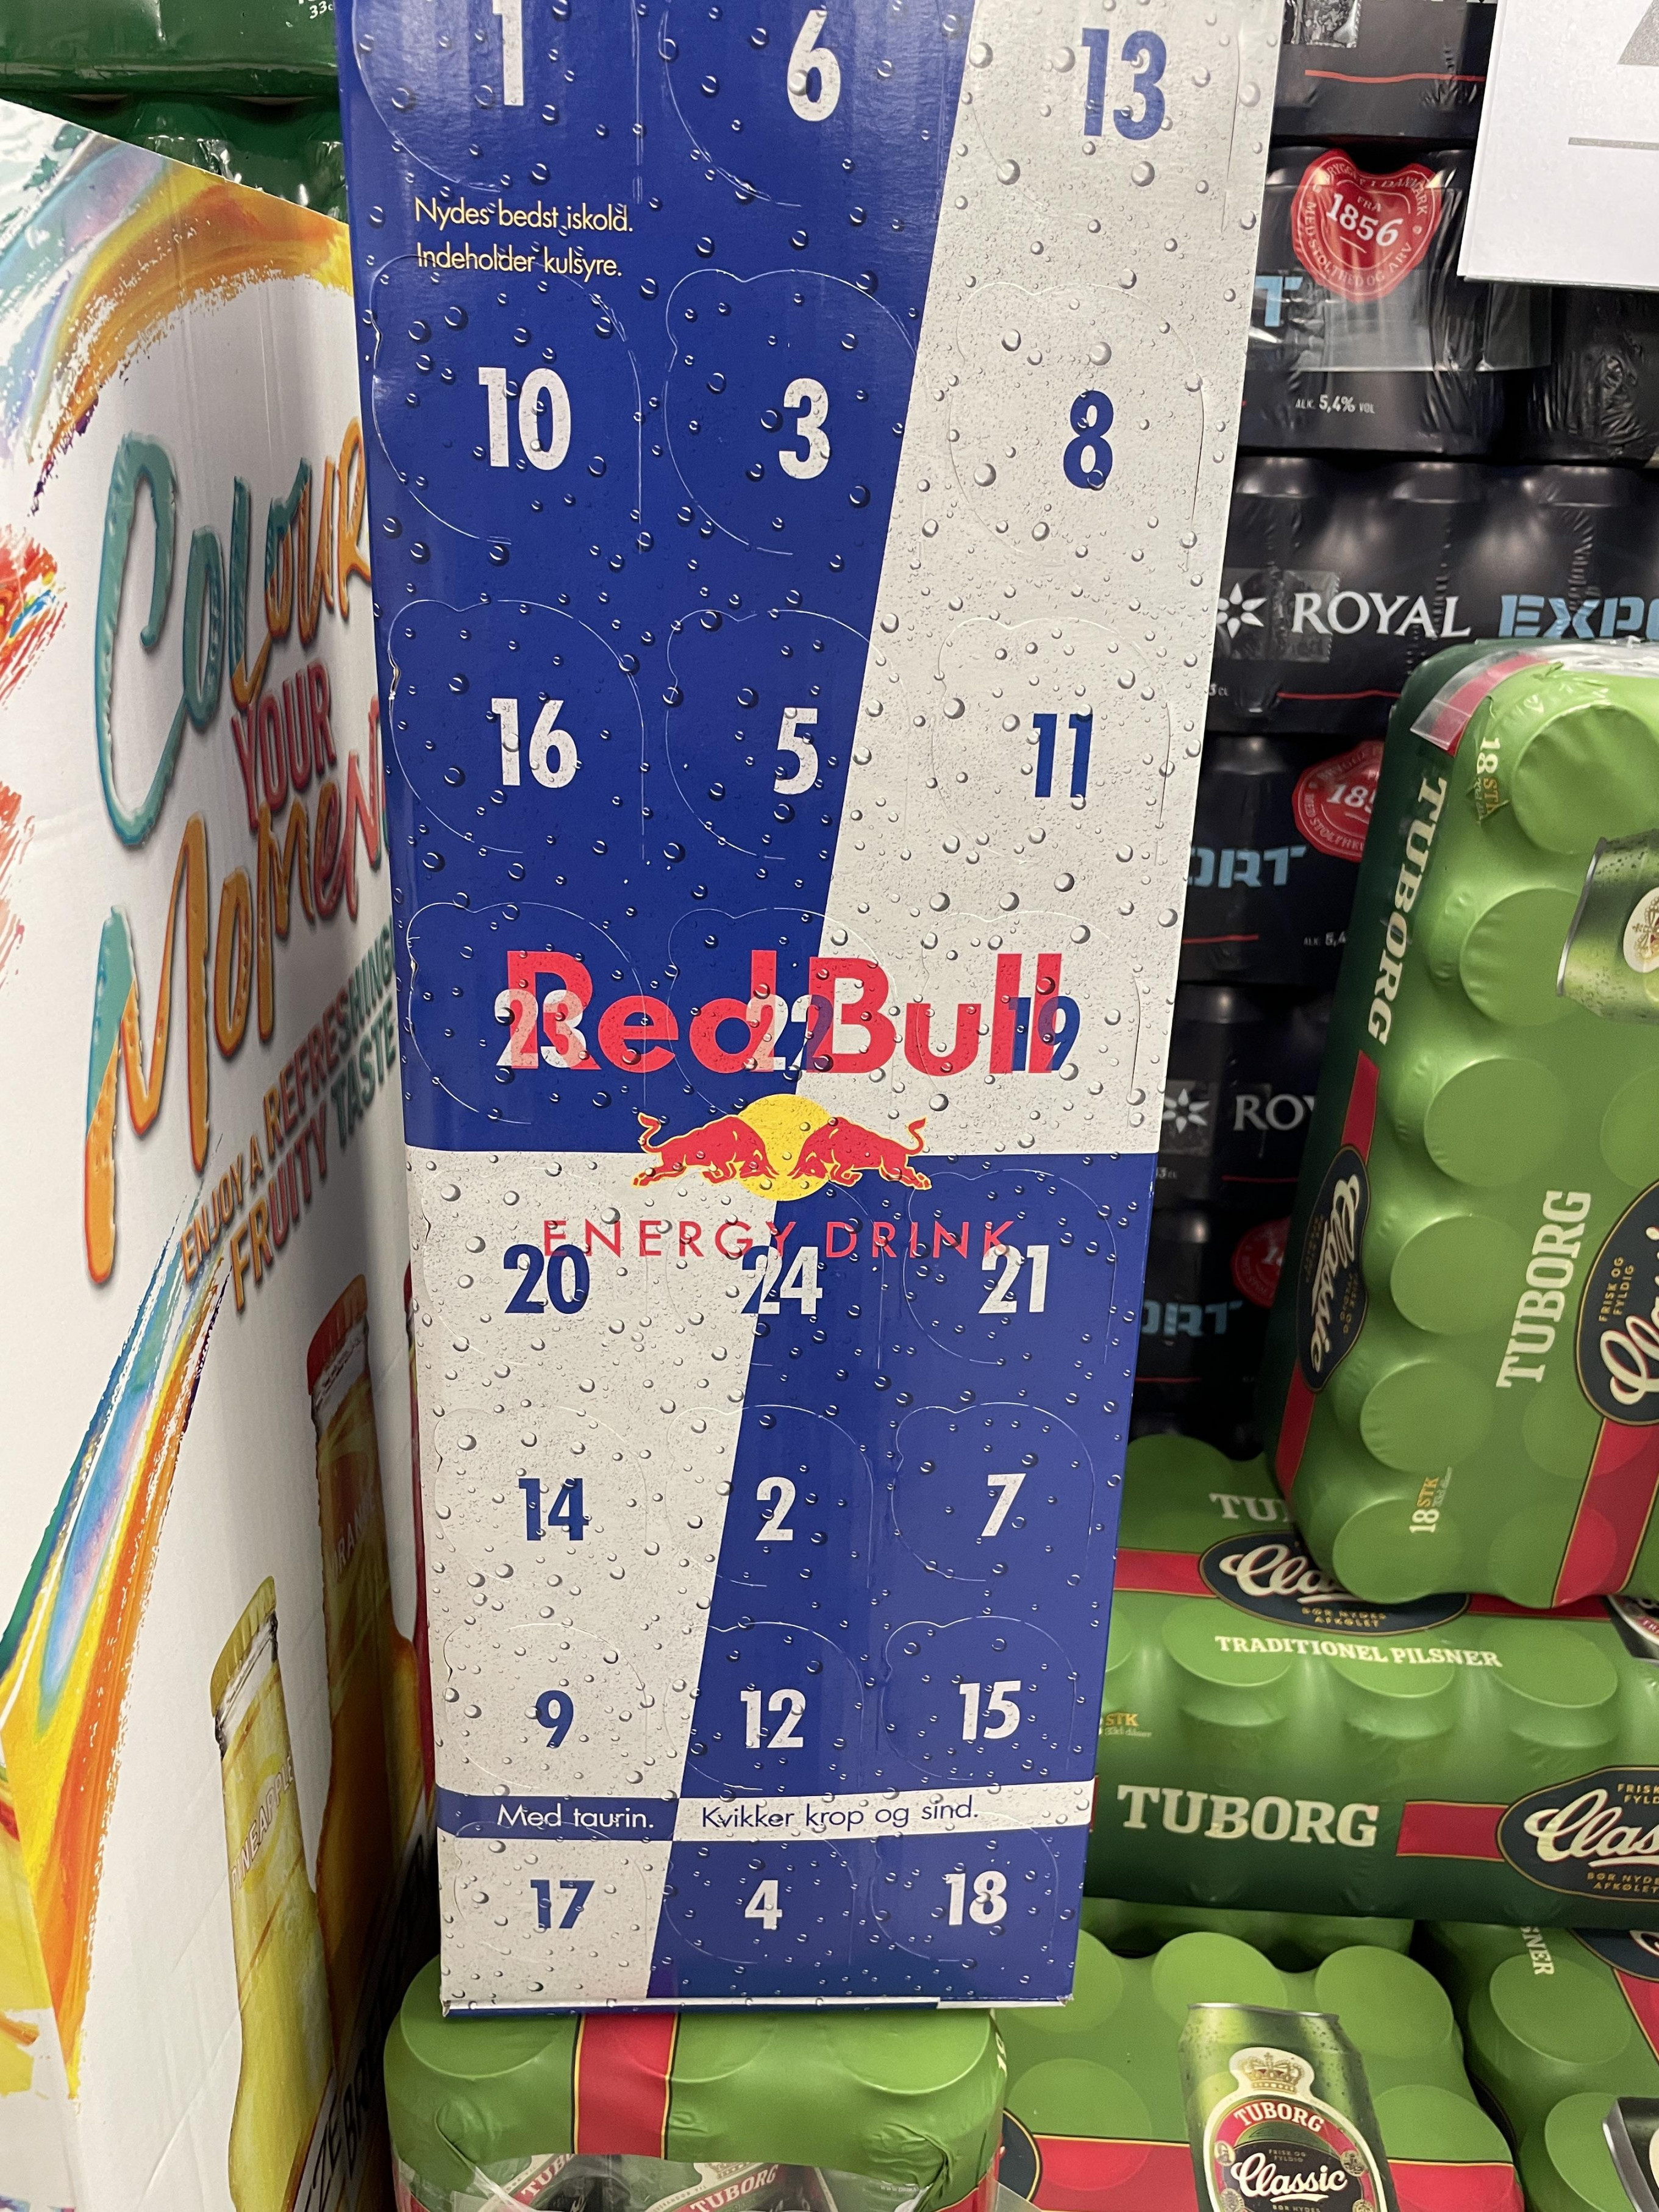 Found this Red Bull Christmas calendar